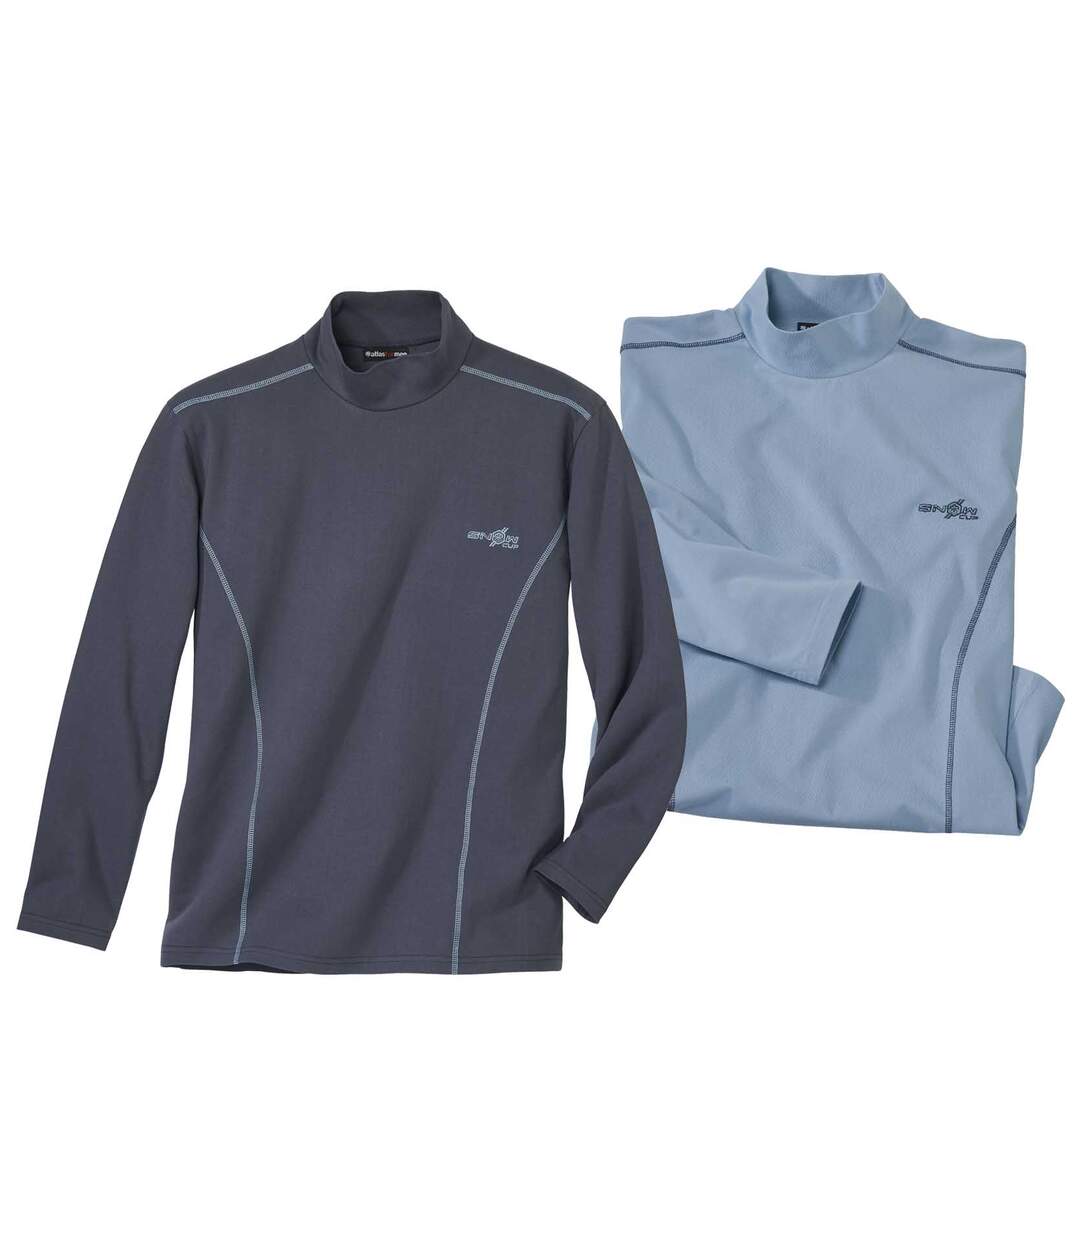 Pack of 2 Men's Blue & Grey Turtleneck Sweaters Atlas For Men